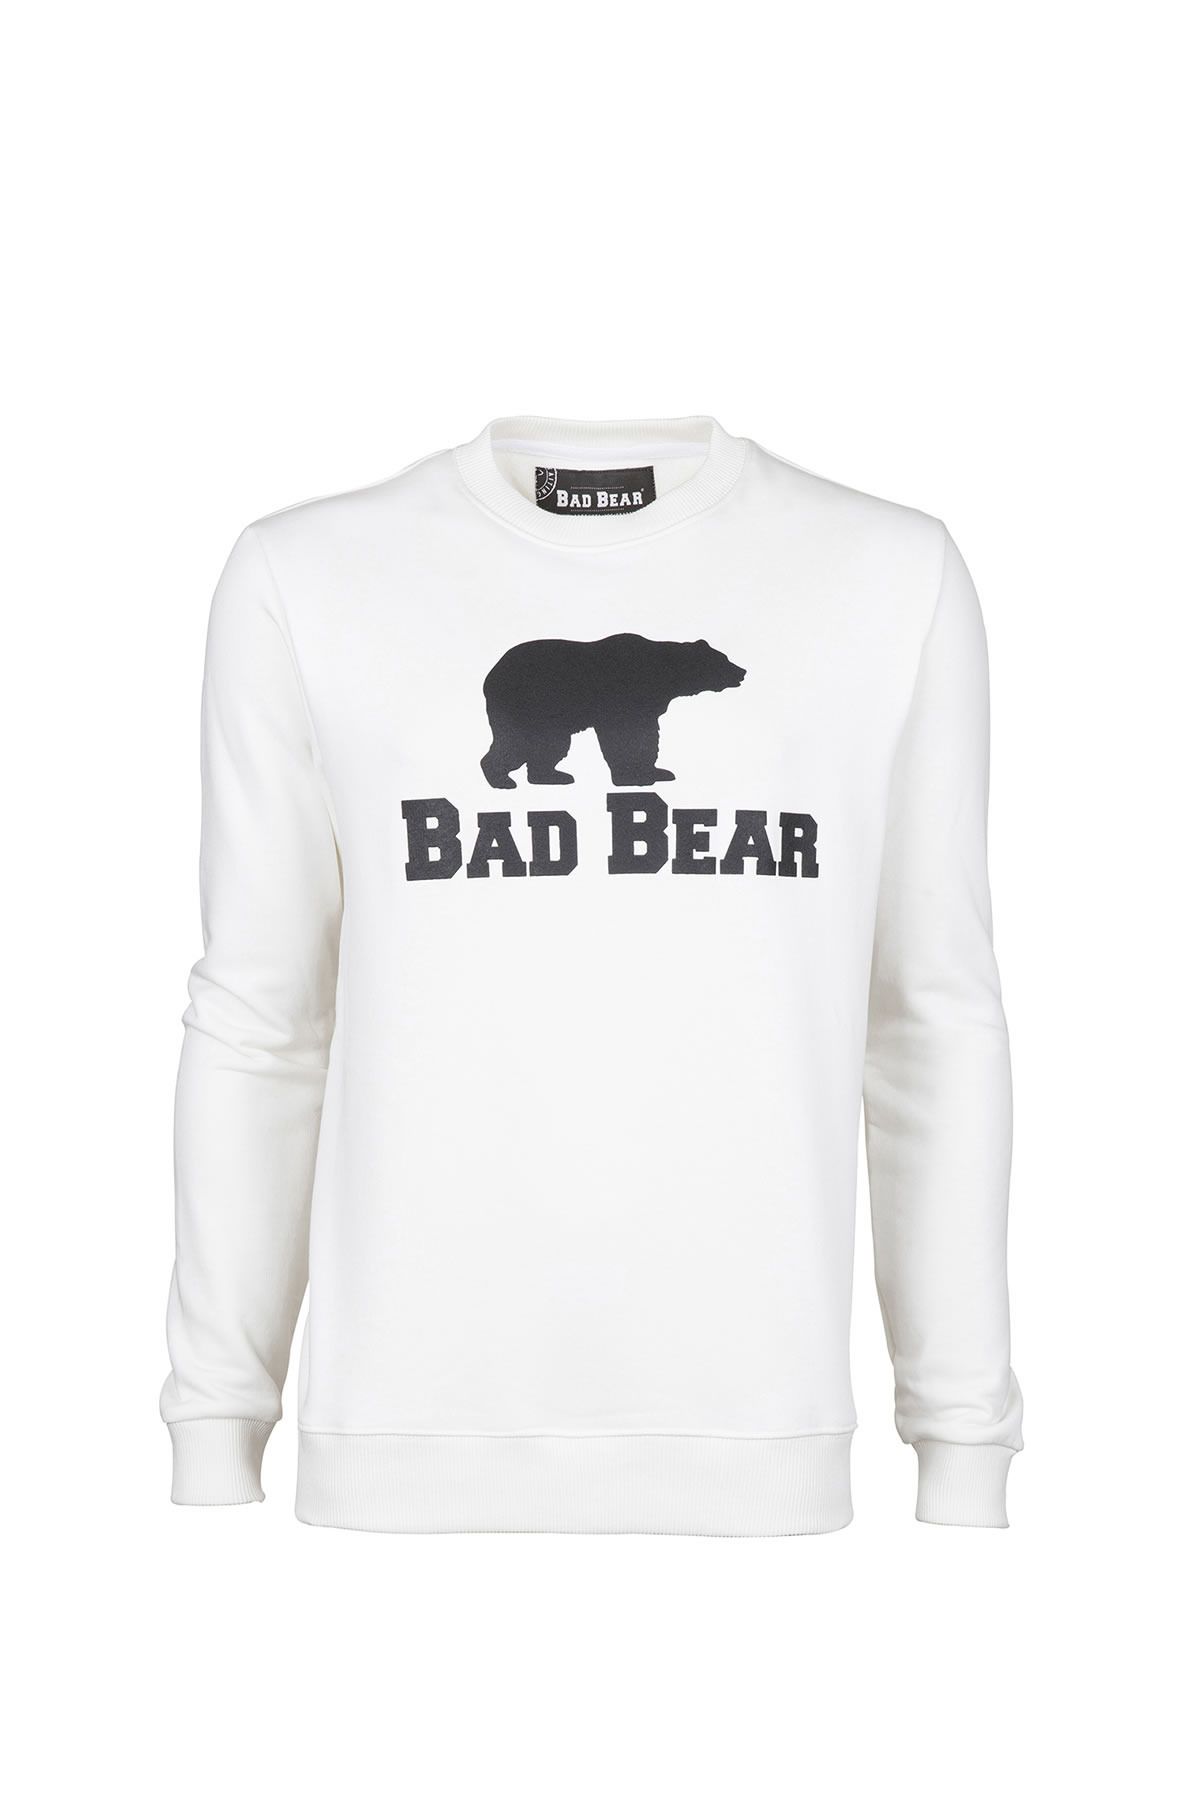 Bad Bear Crewneck Erkek Sweatshirt 20.02.12.011-c04